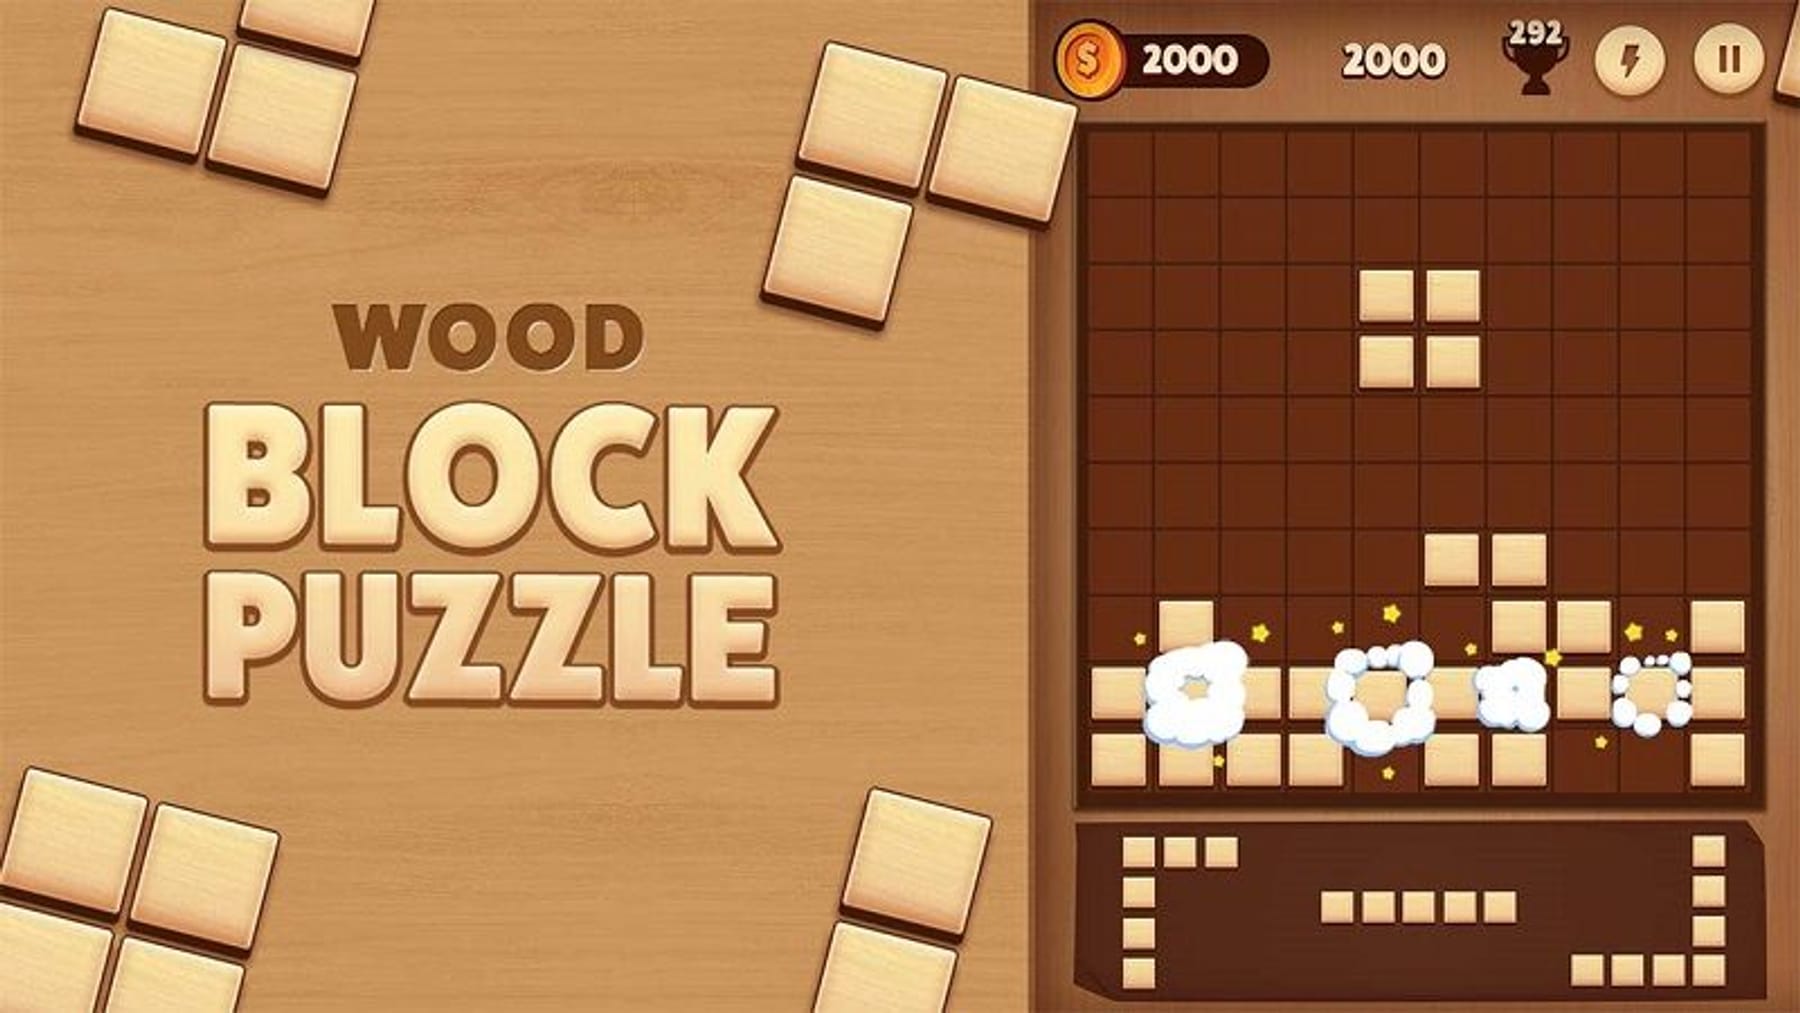 Wood Block Puzzle kostenlos online spielen bei t-online.de